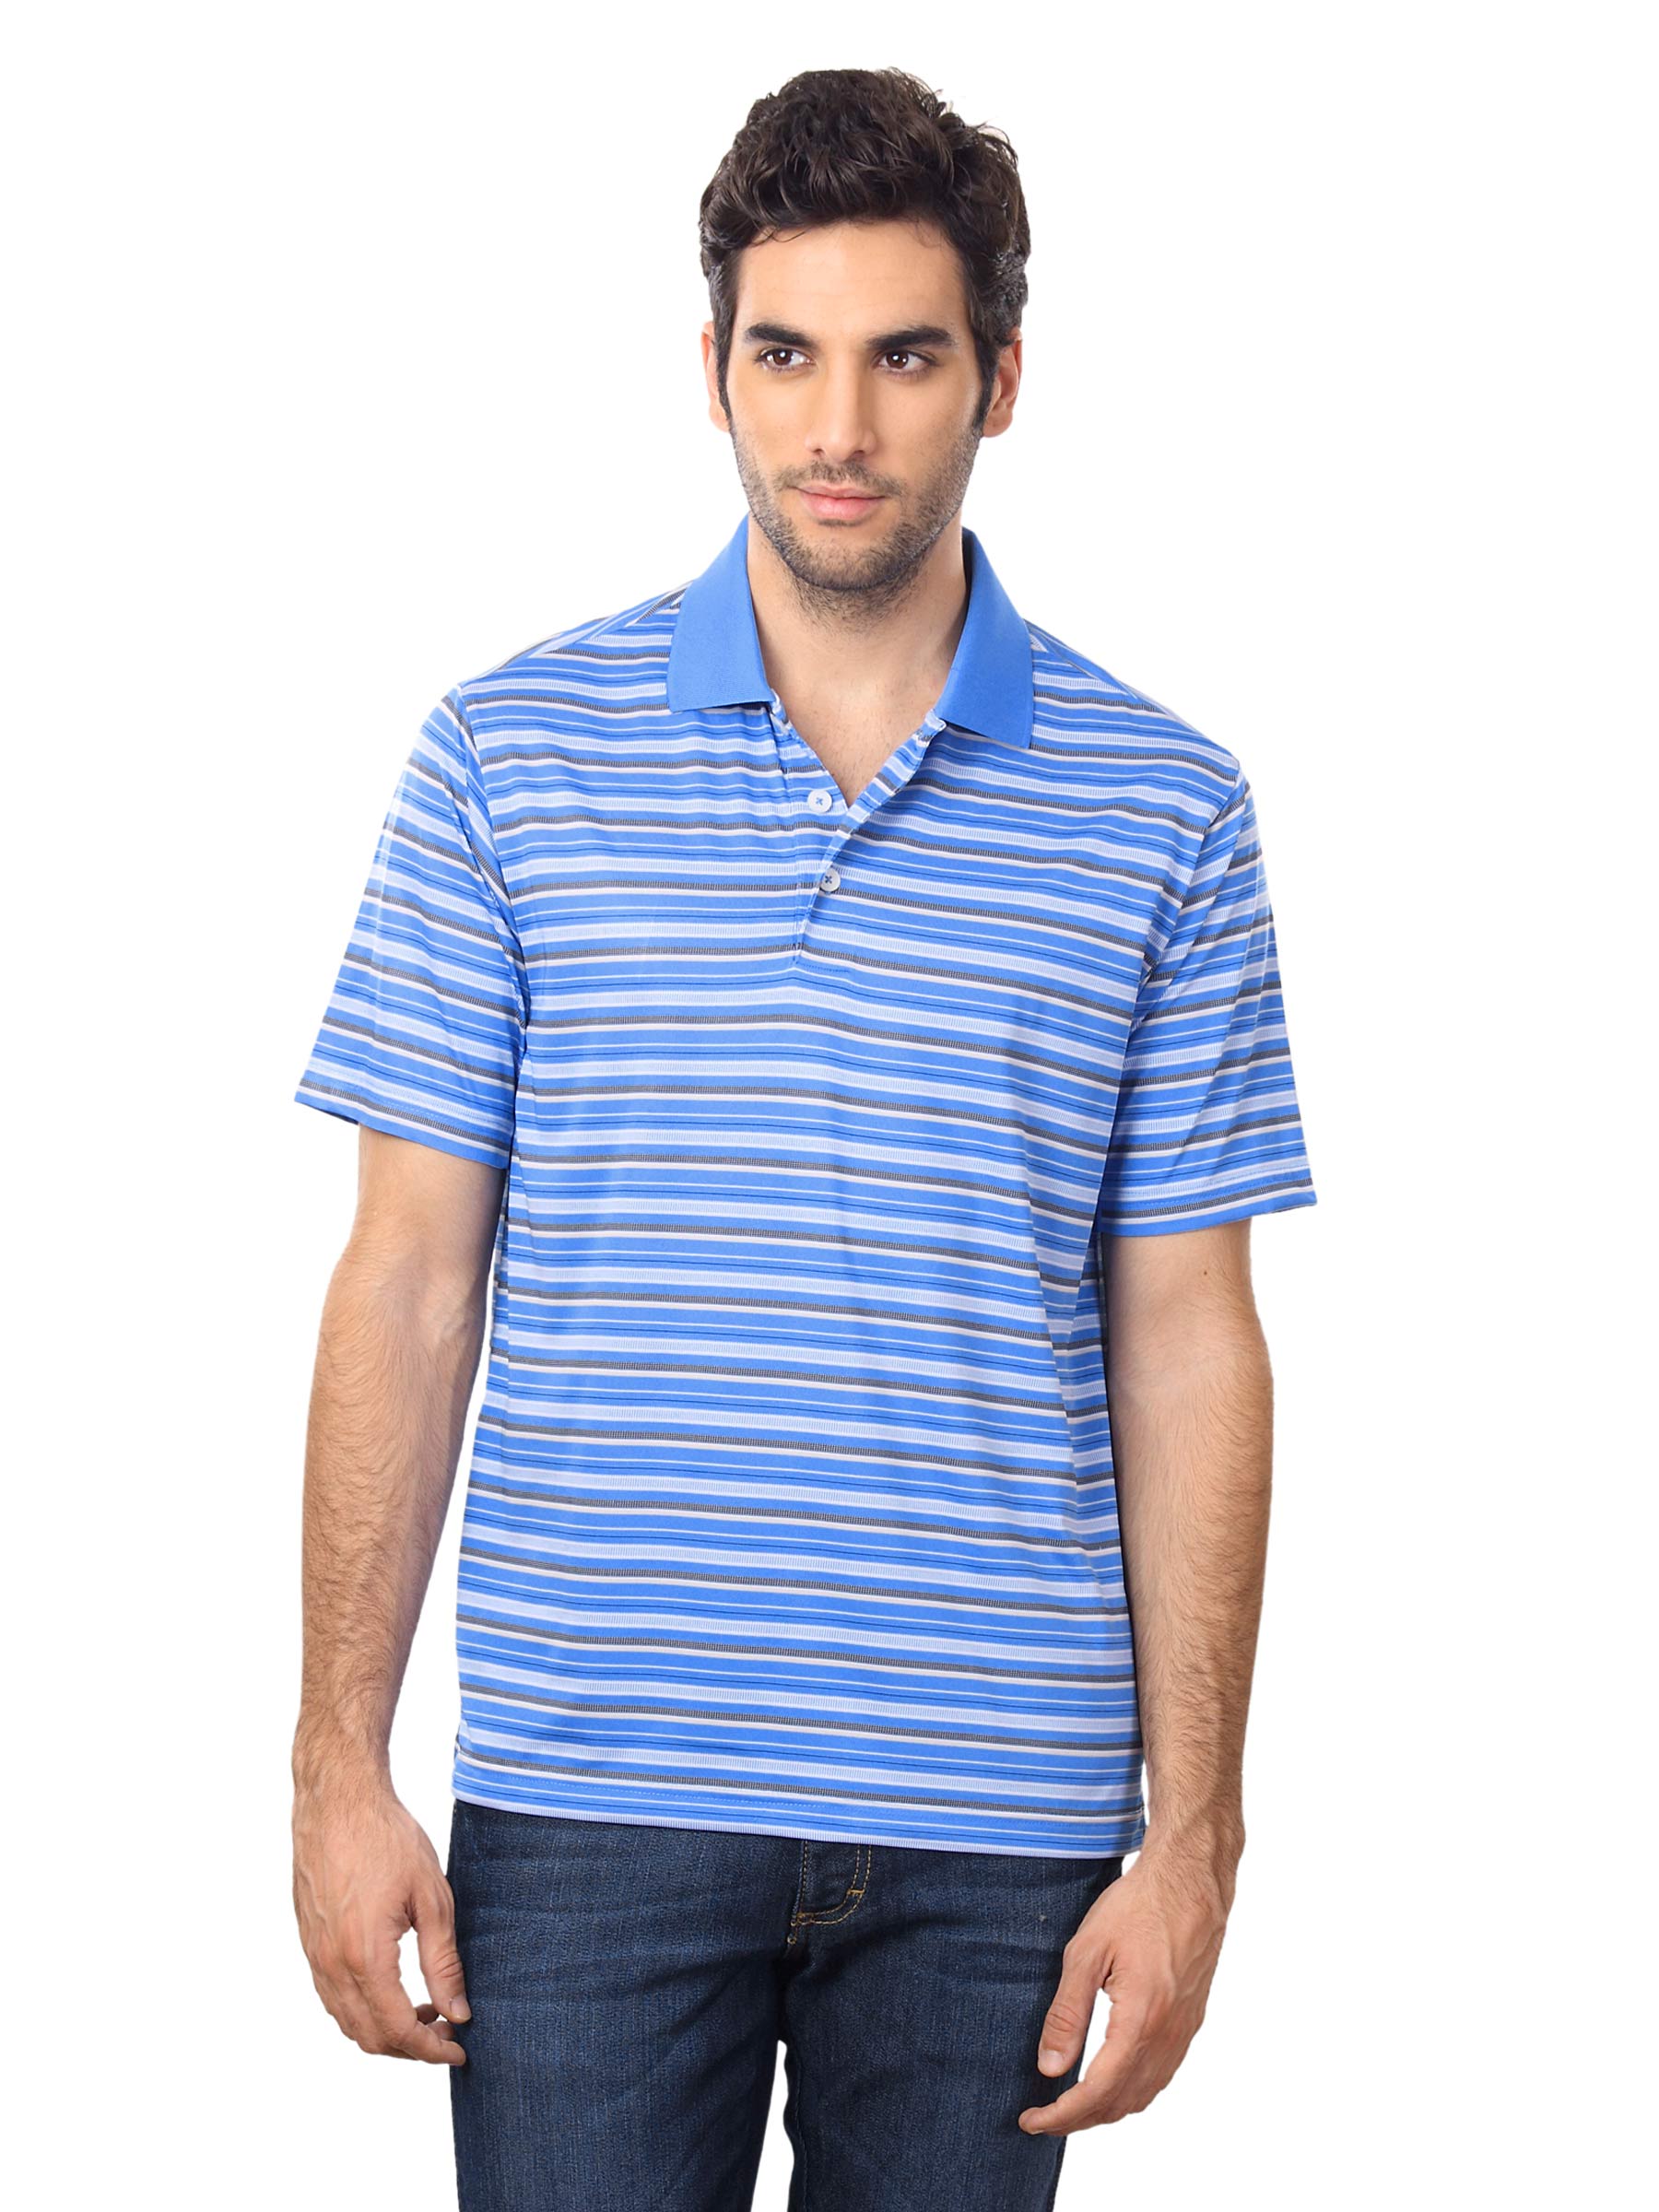 ADIDAS Men Blue & White Striped Polo T-shirt